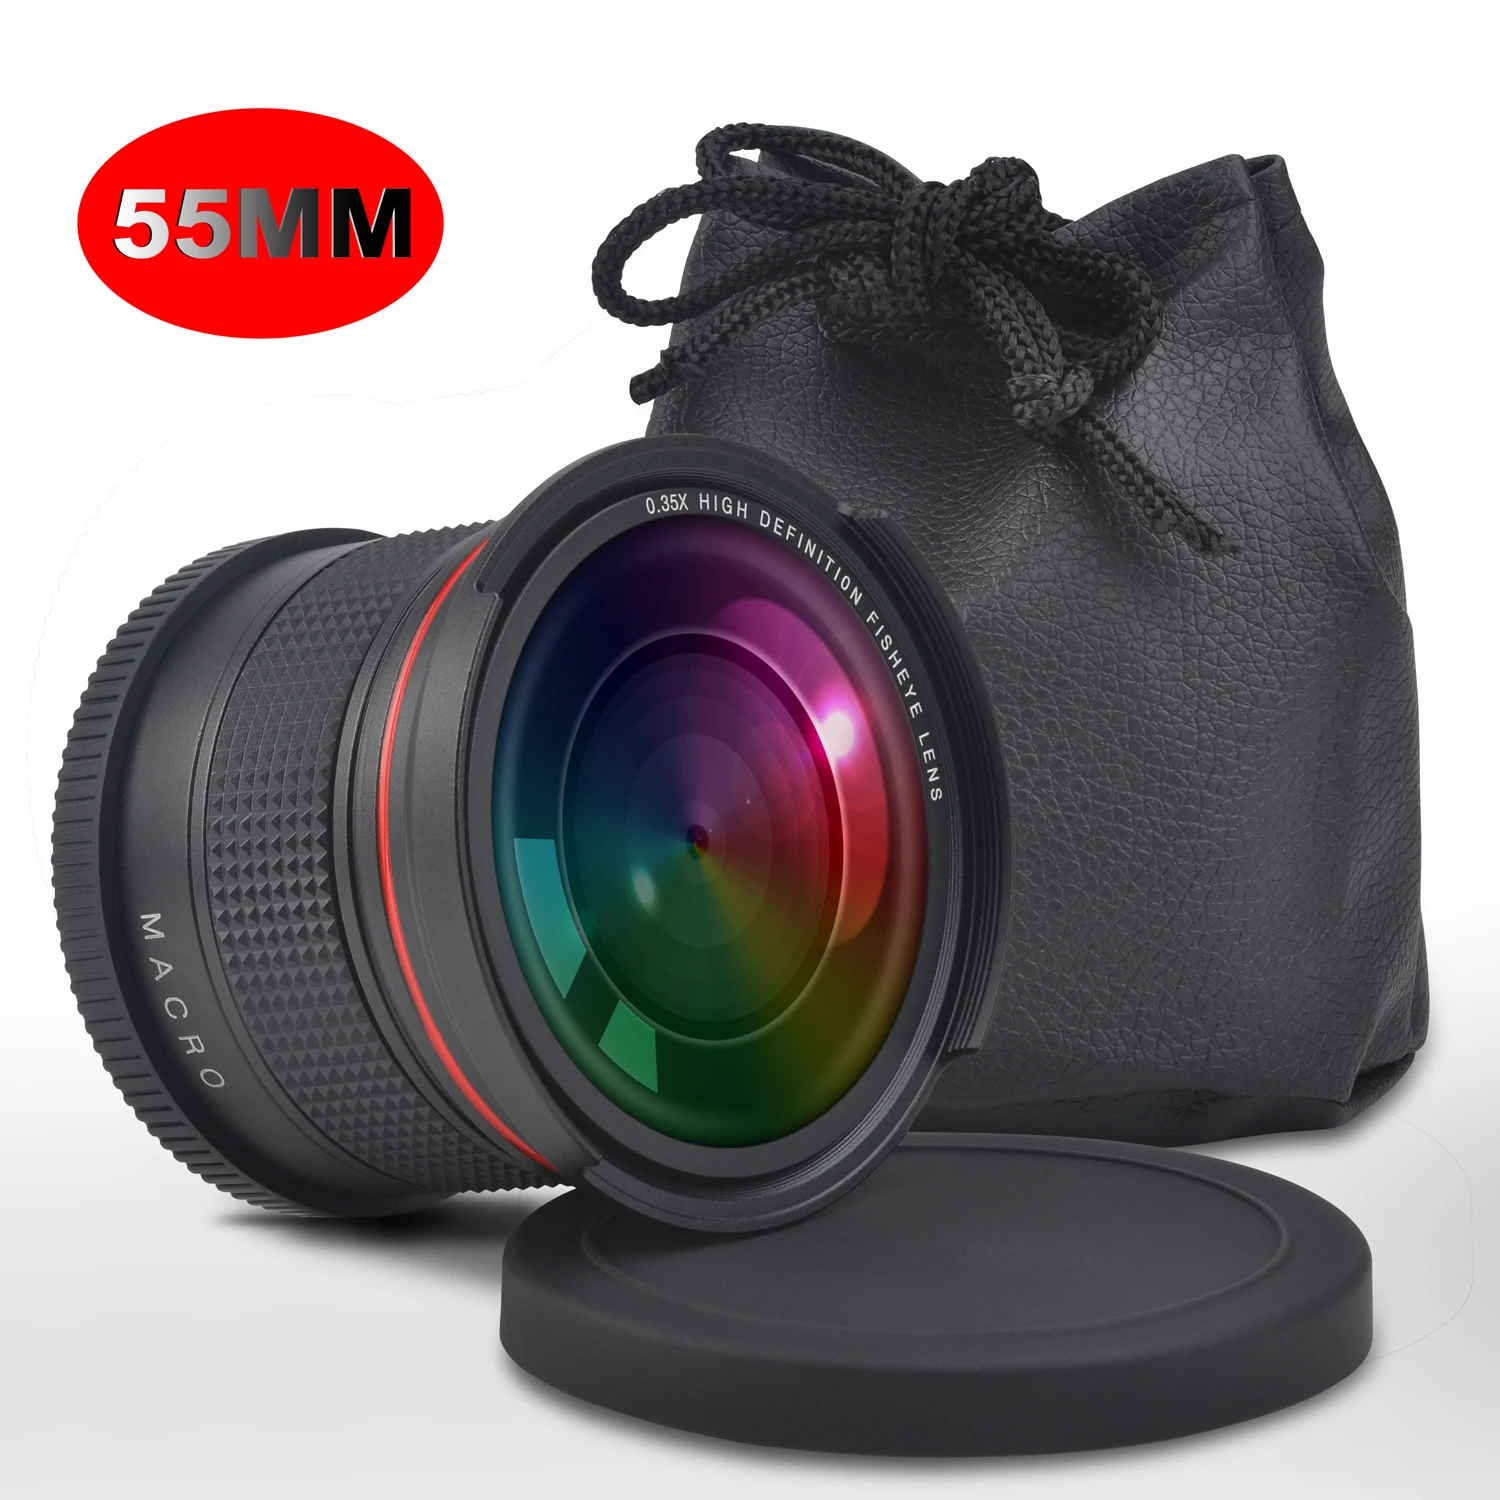 55MM 0.35x Fisheye Wide Angle Lens (W/ Macro Portion) for Nikon D5300 D5200 D5100 D3500 D3400 D3300 D3200 and Sony A99II A77II